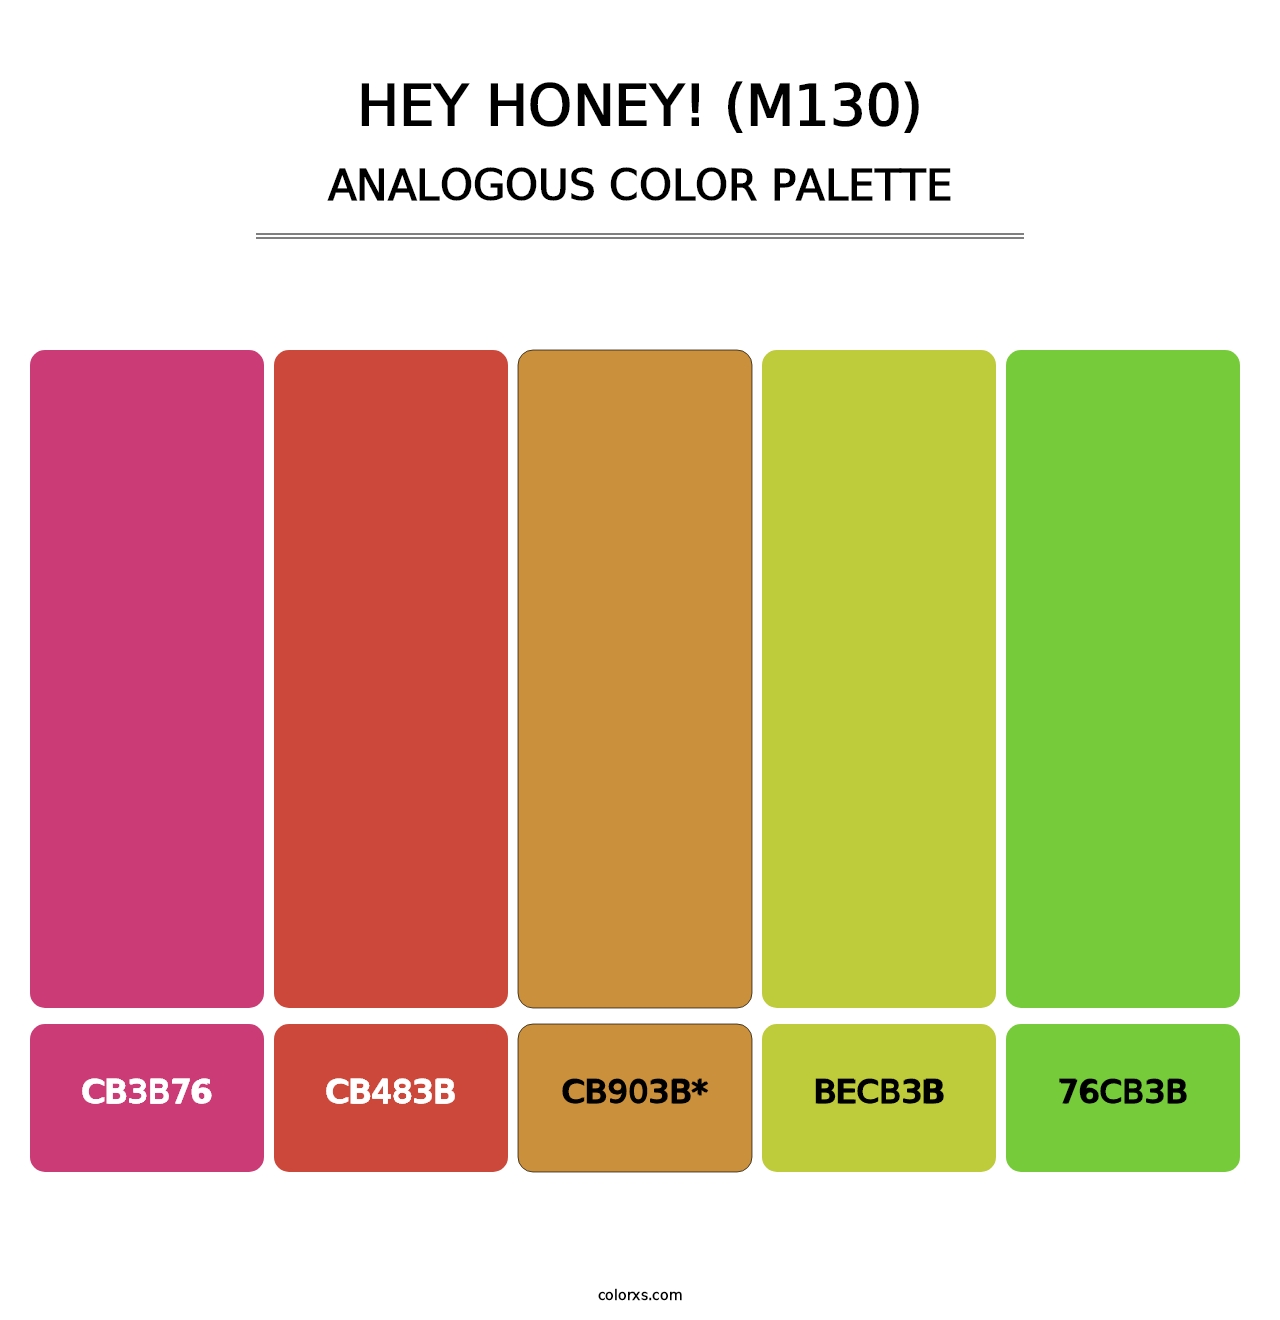 Hey Honey! (M130) - Analogous Color Palette